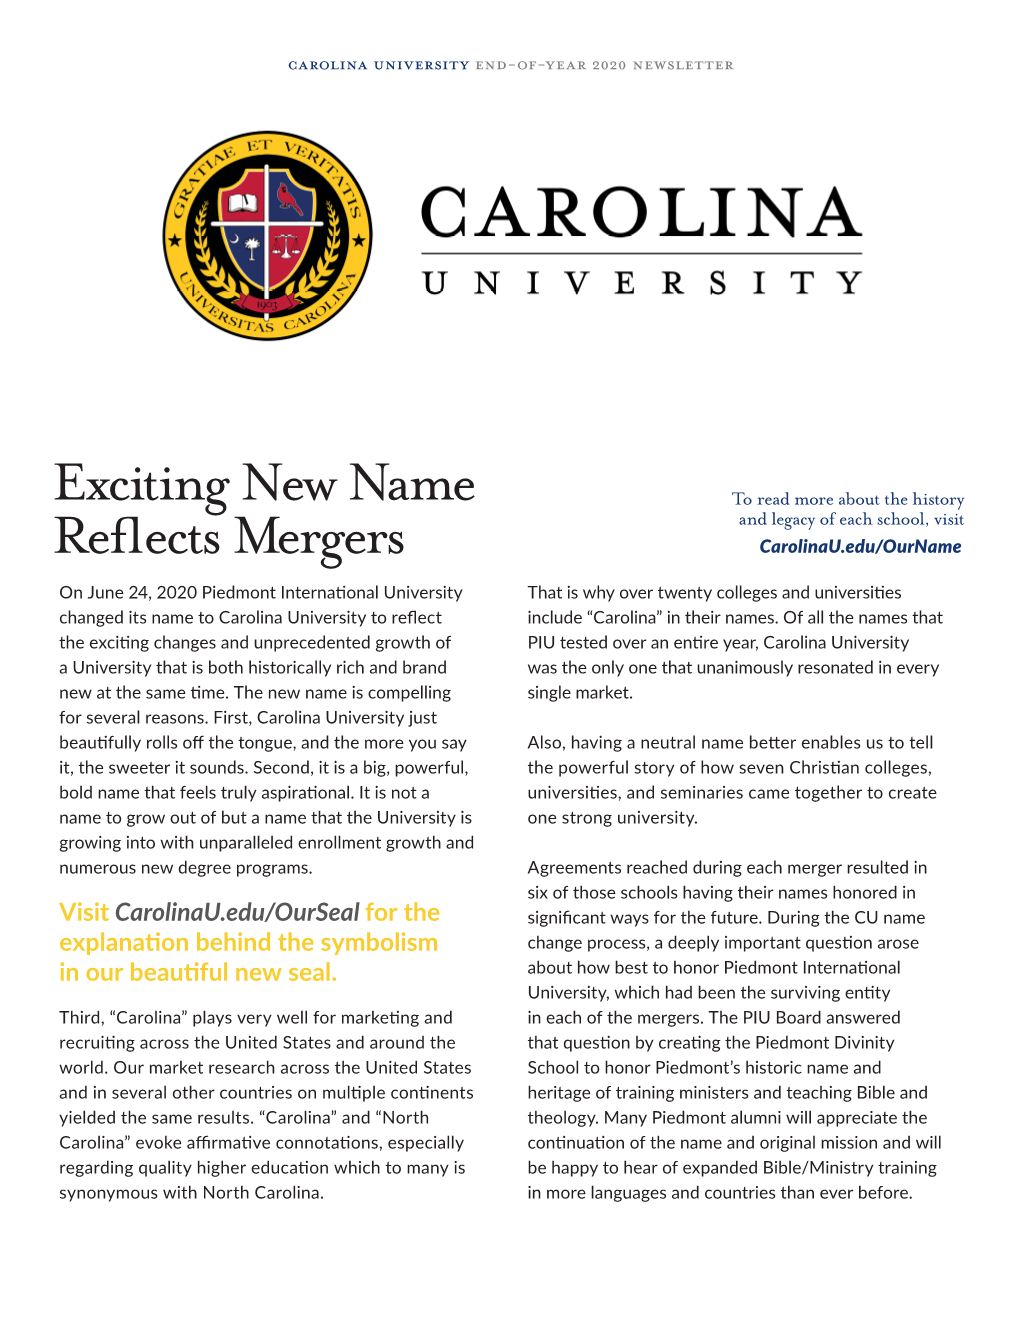 2011921-Carolina University Newsletter V3.Indd